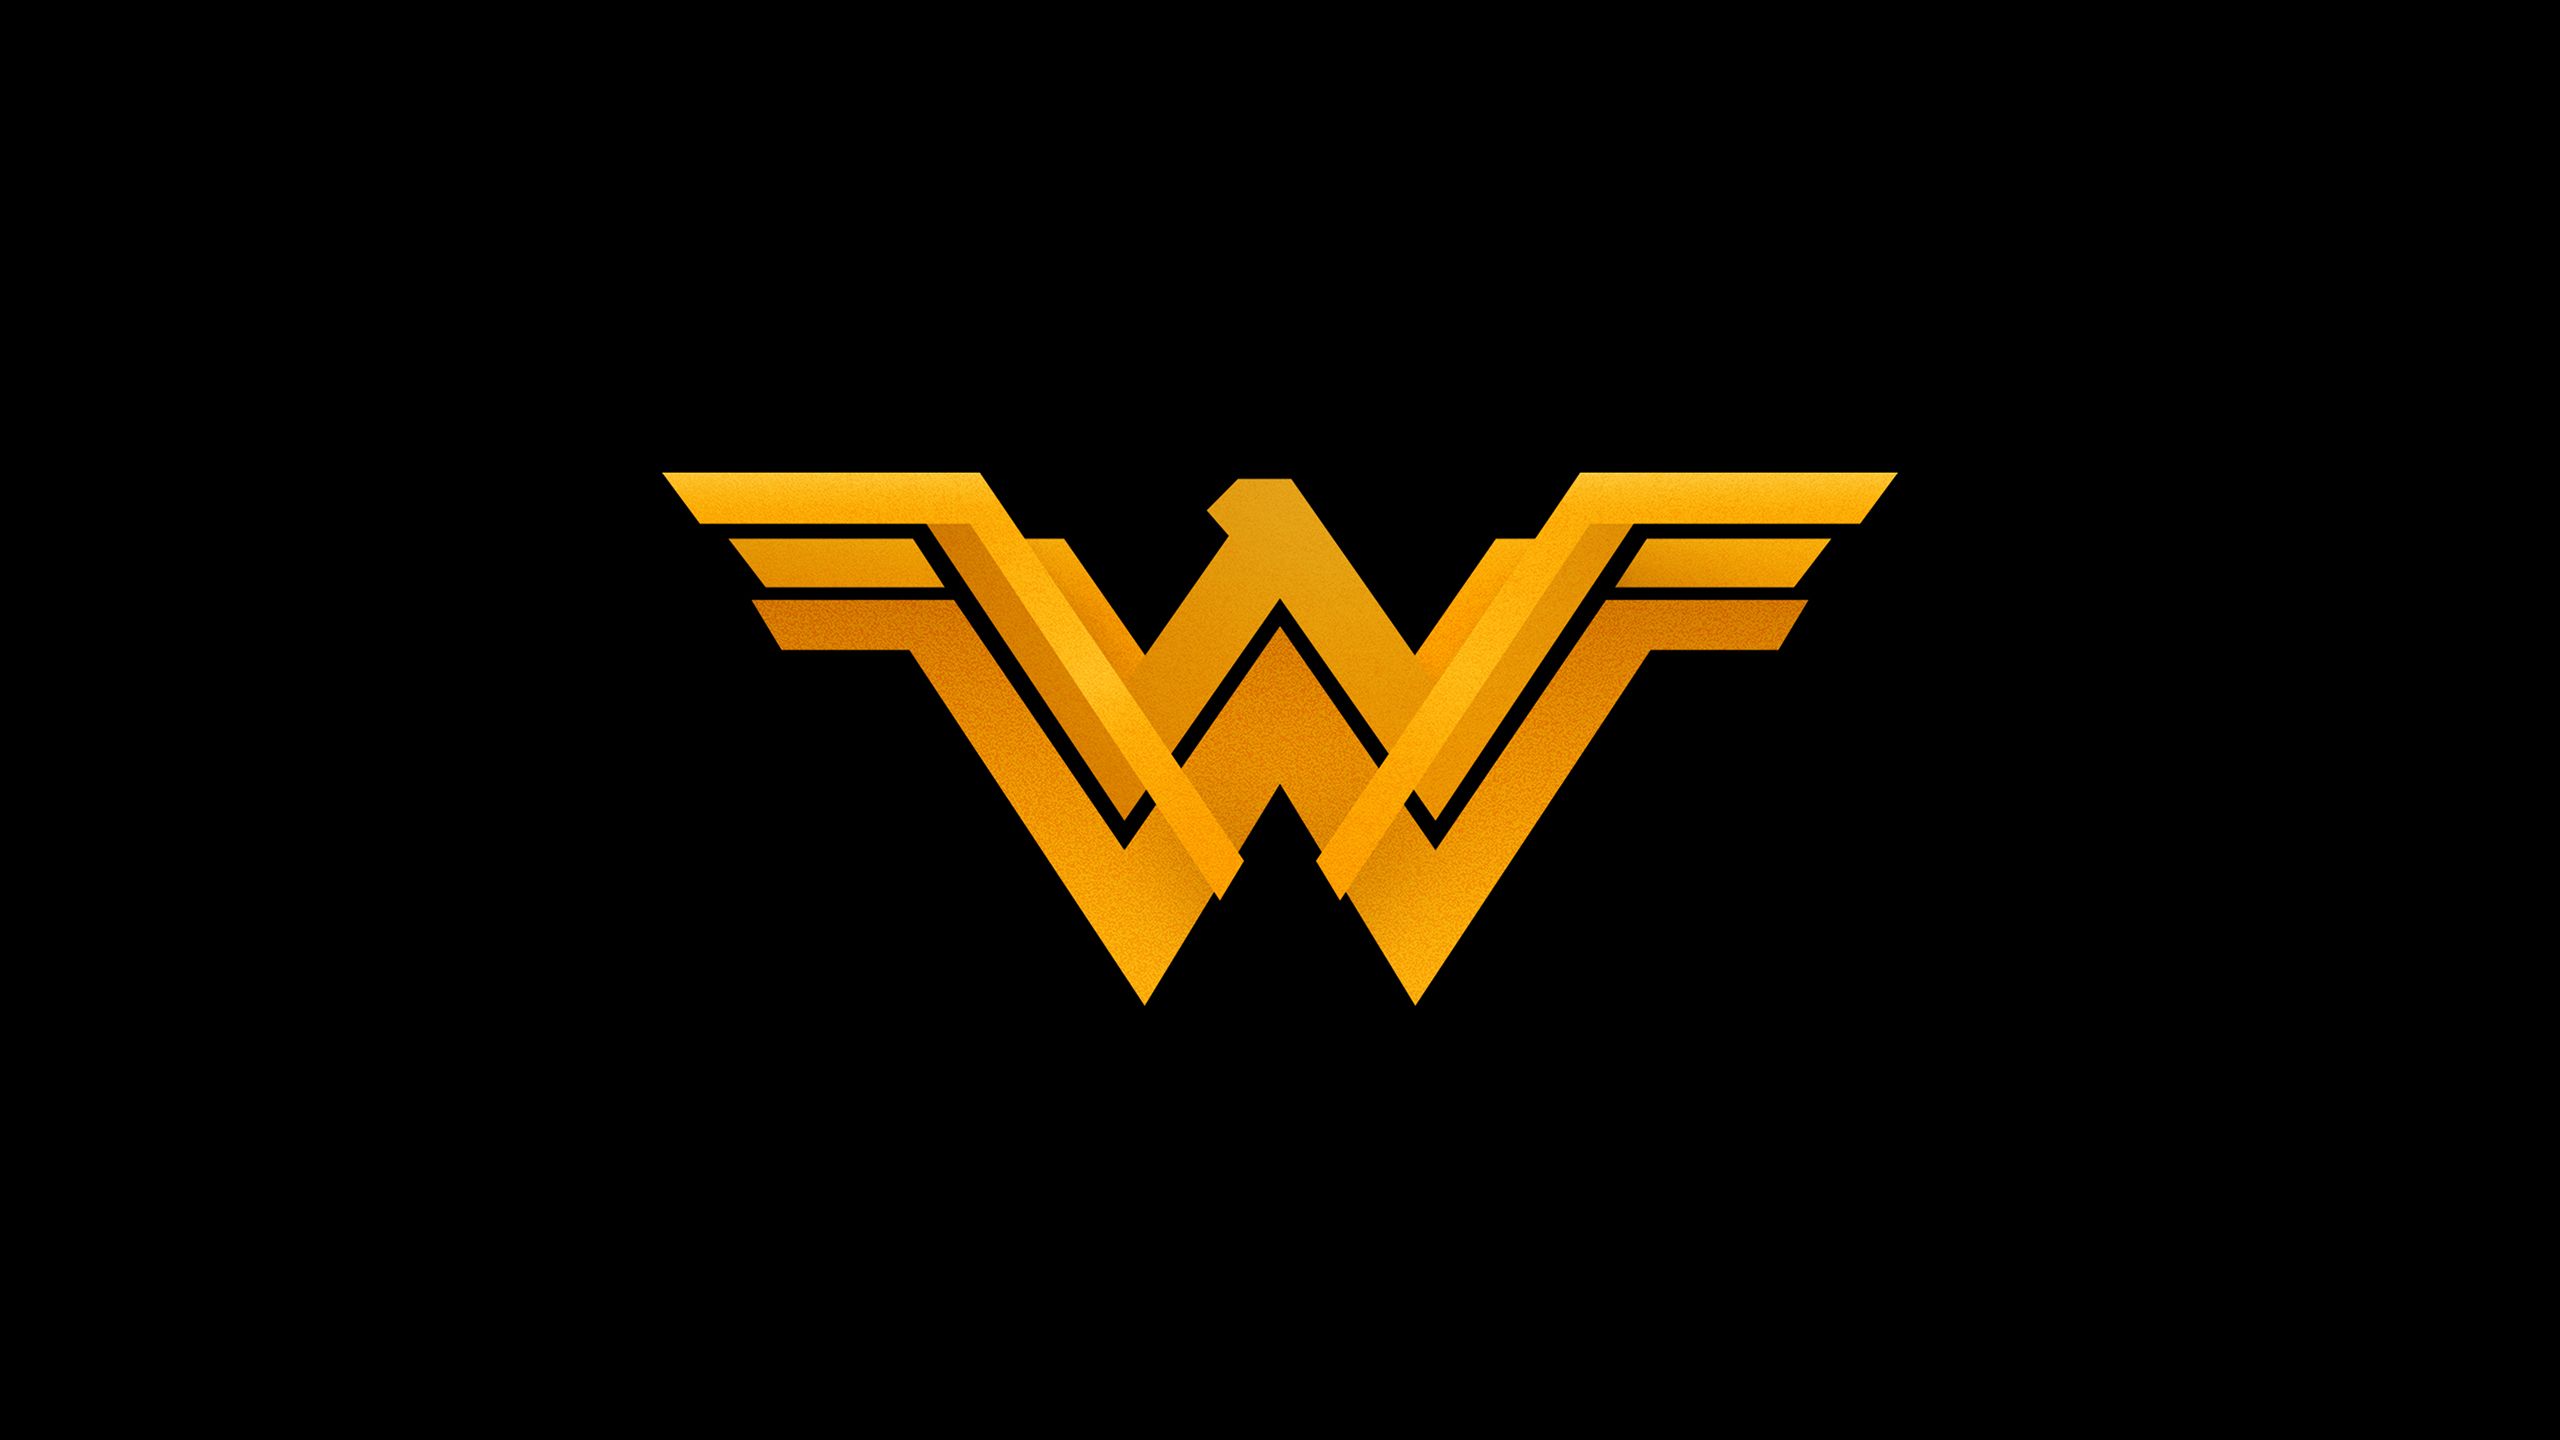 Wonder Woman Logo Wallpaper Free Wonder Woman Logo Background